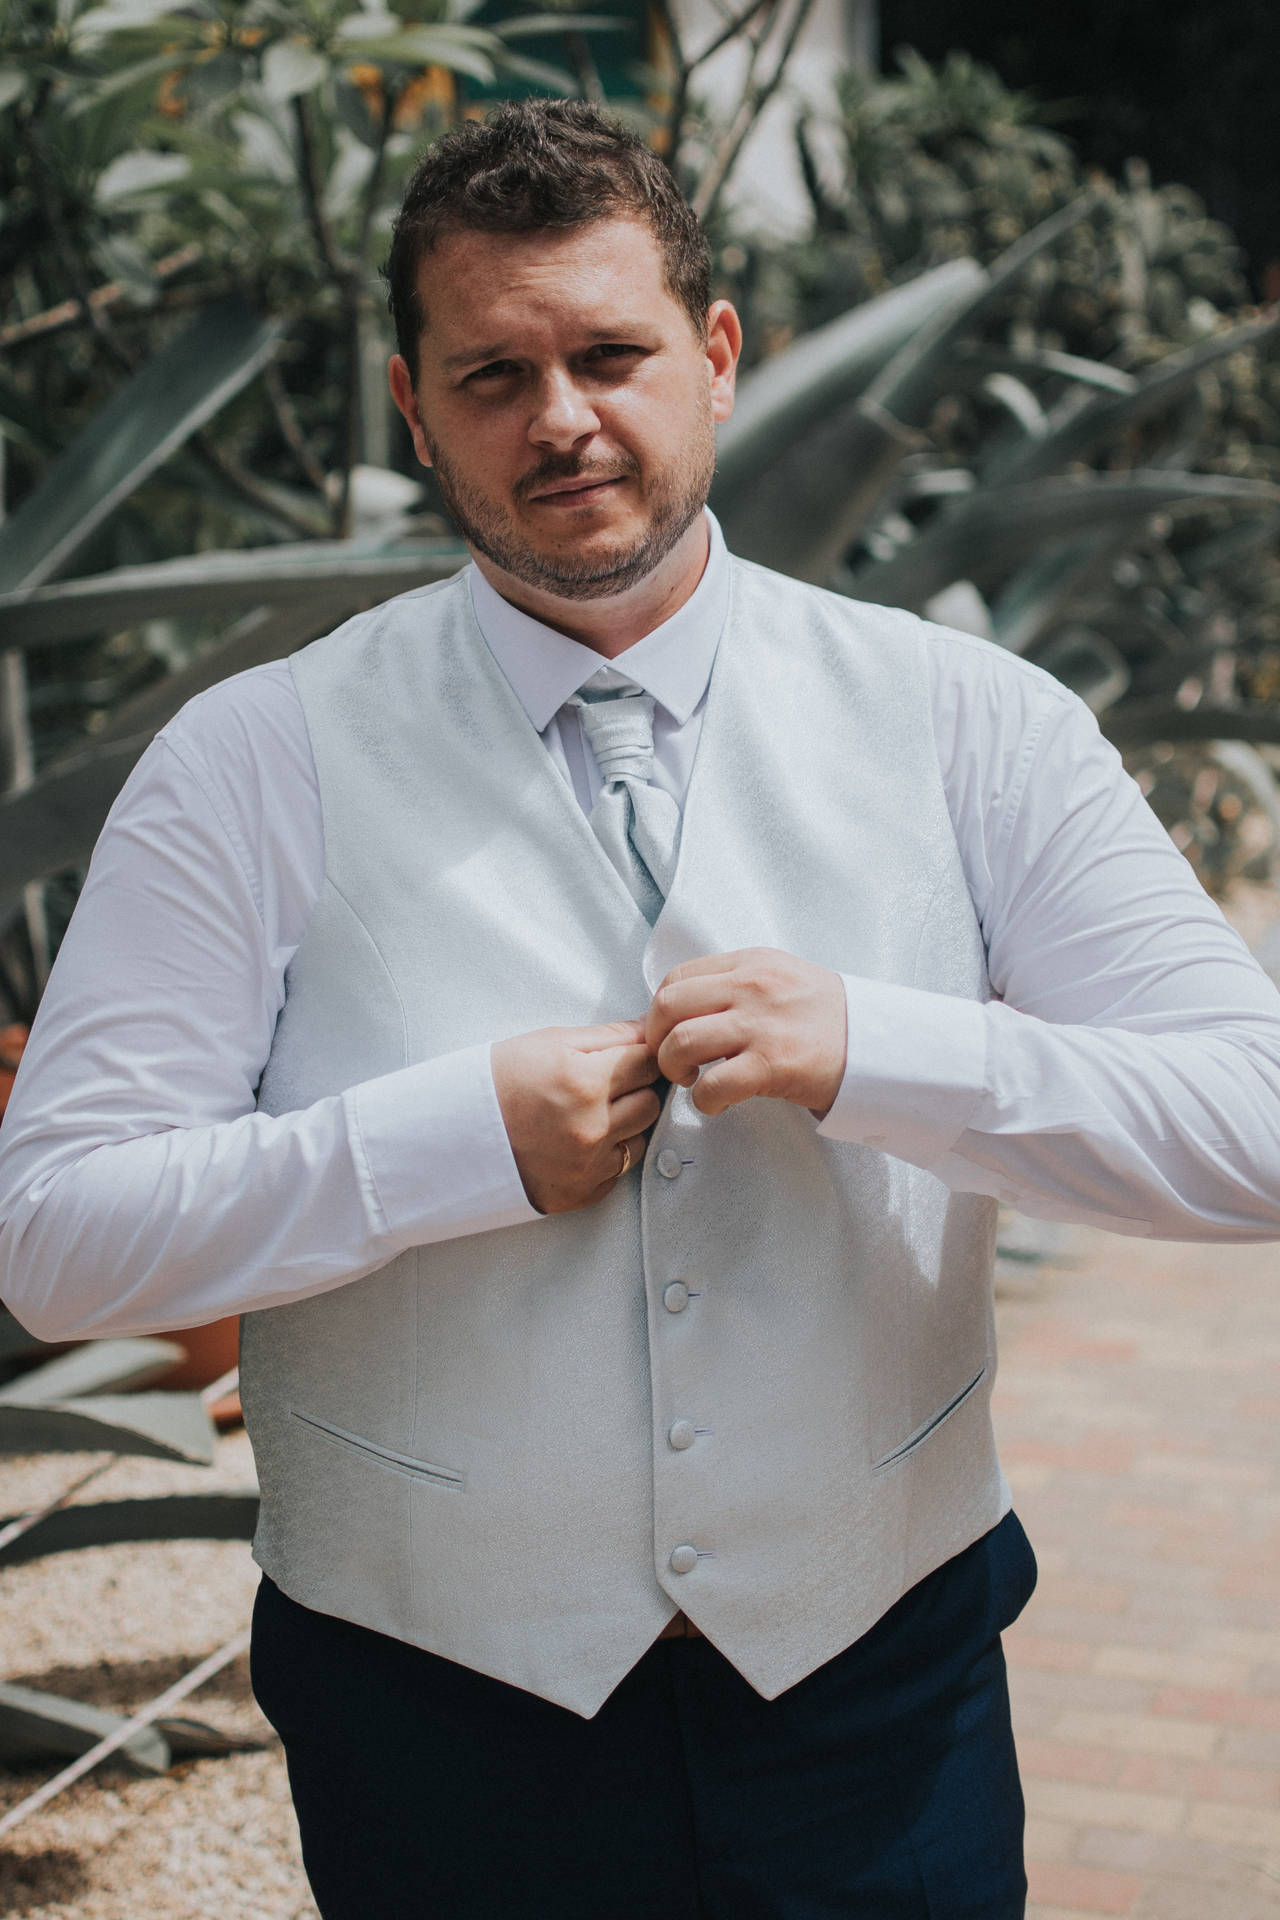 Fat Person Wedding Suit Wallpaper